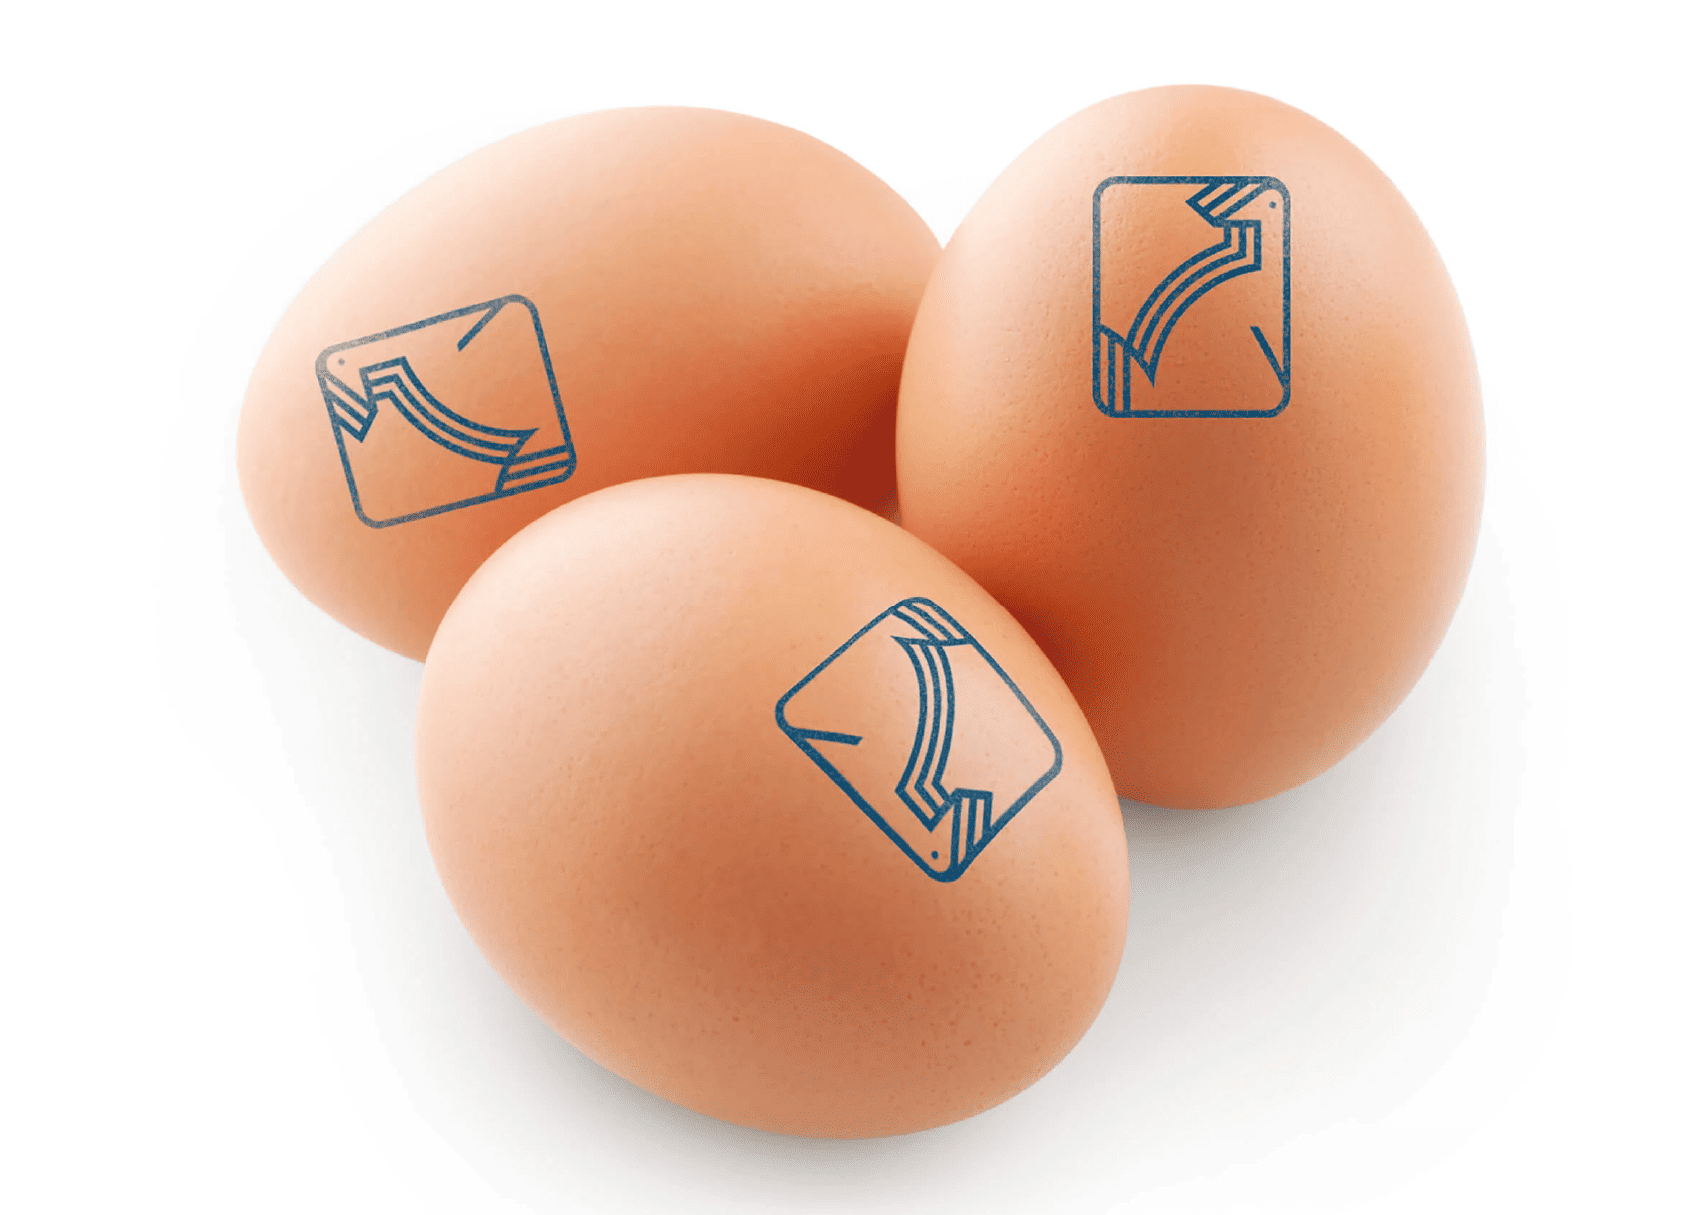 Cinco detalles del huevo